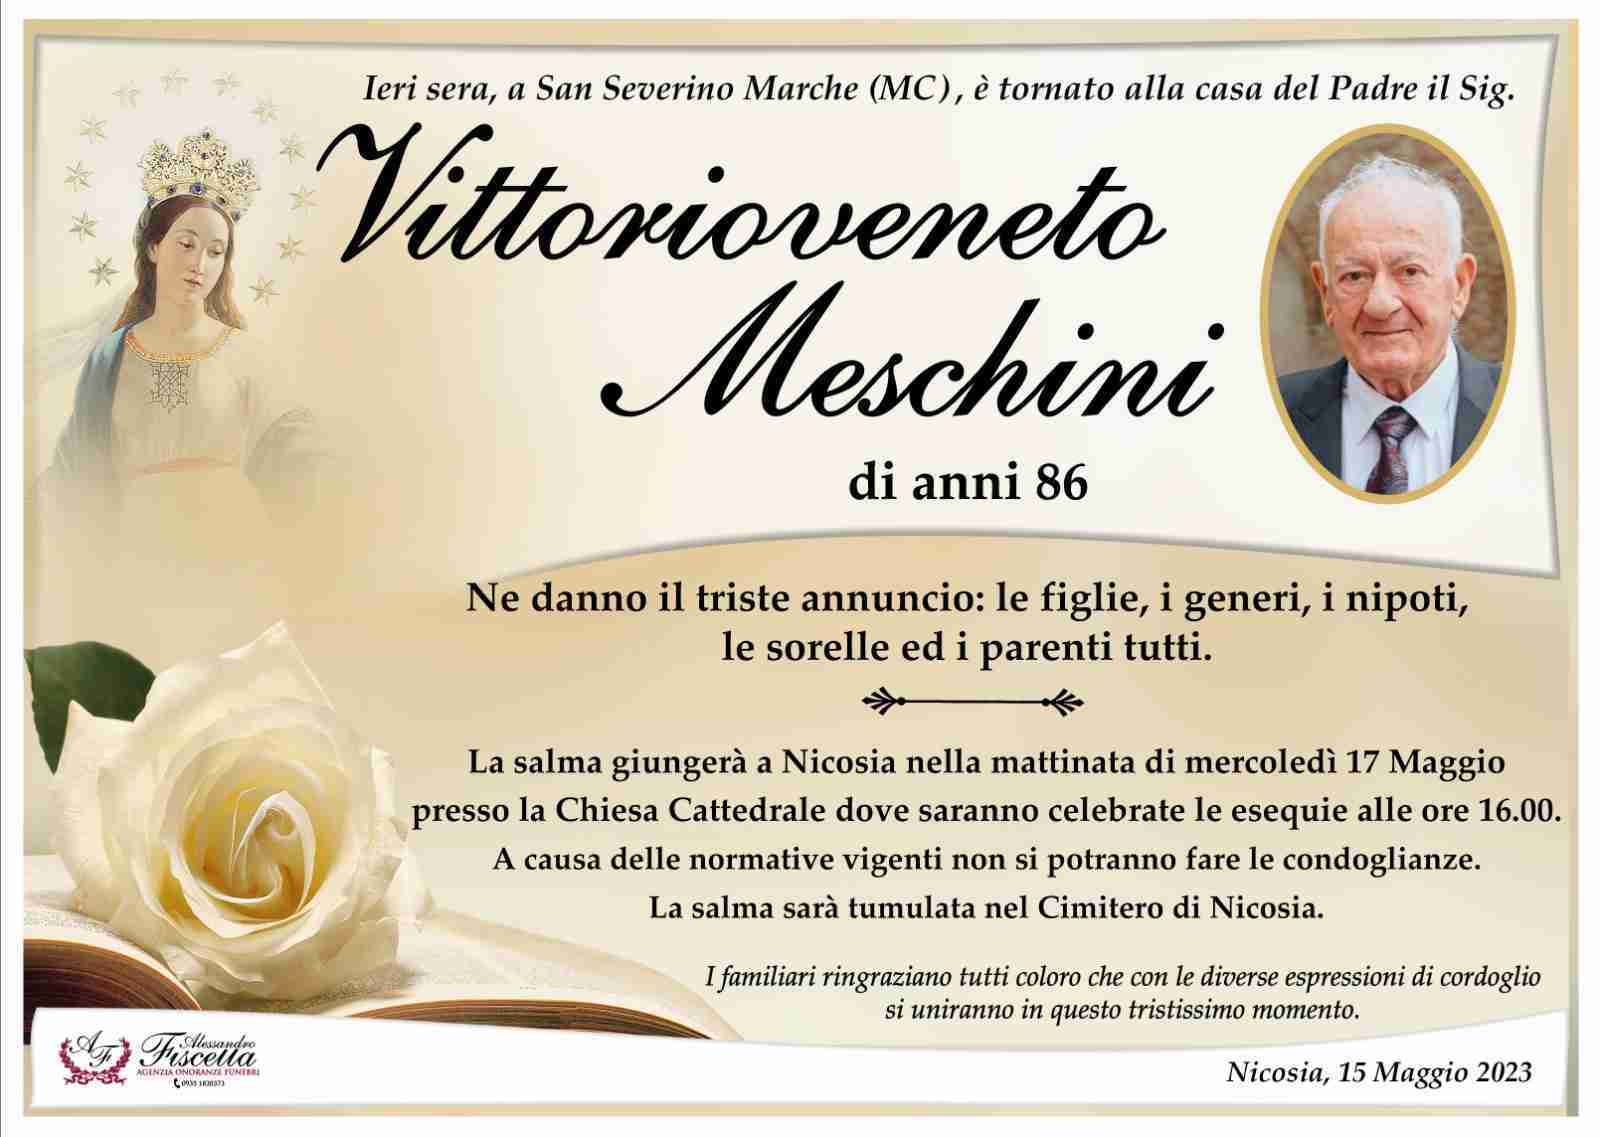 Vittorioveneto Meschini